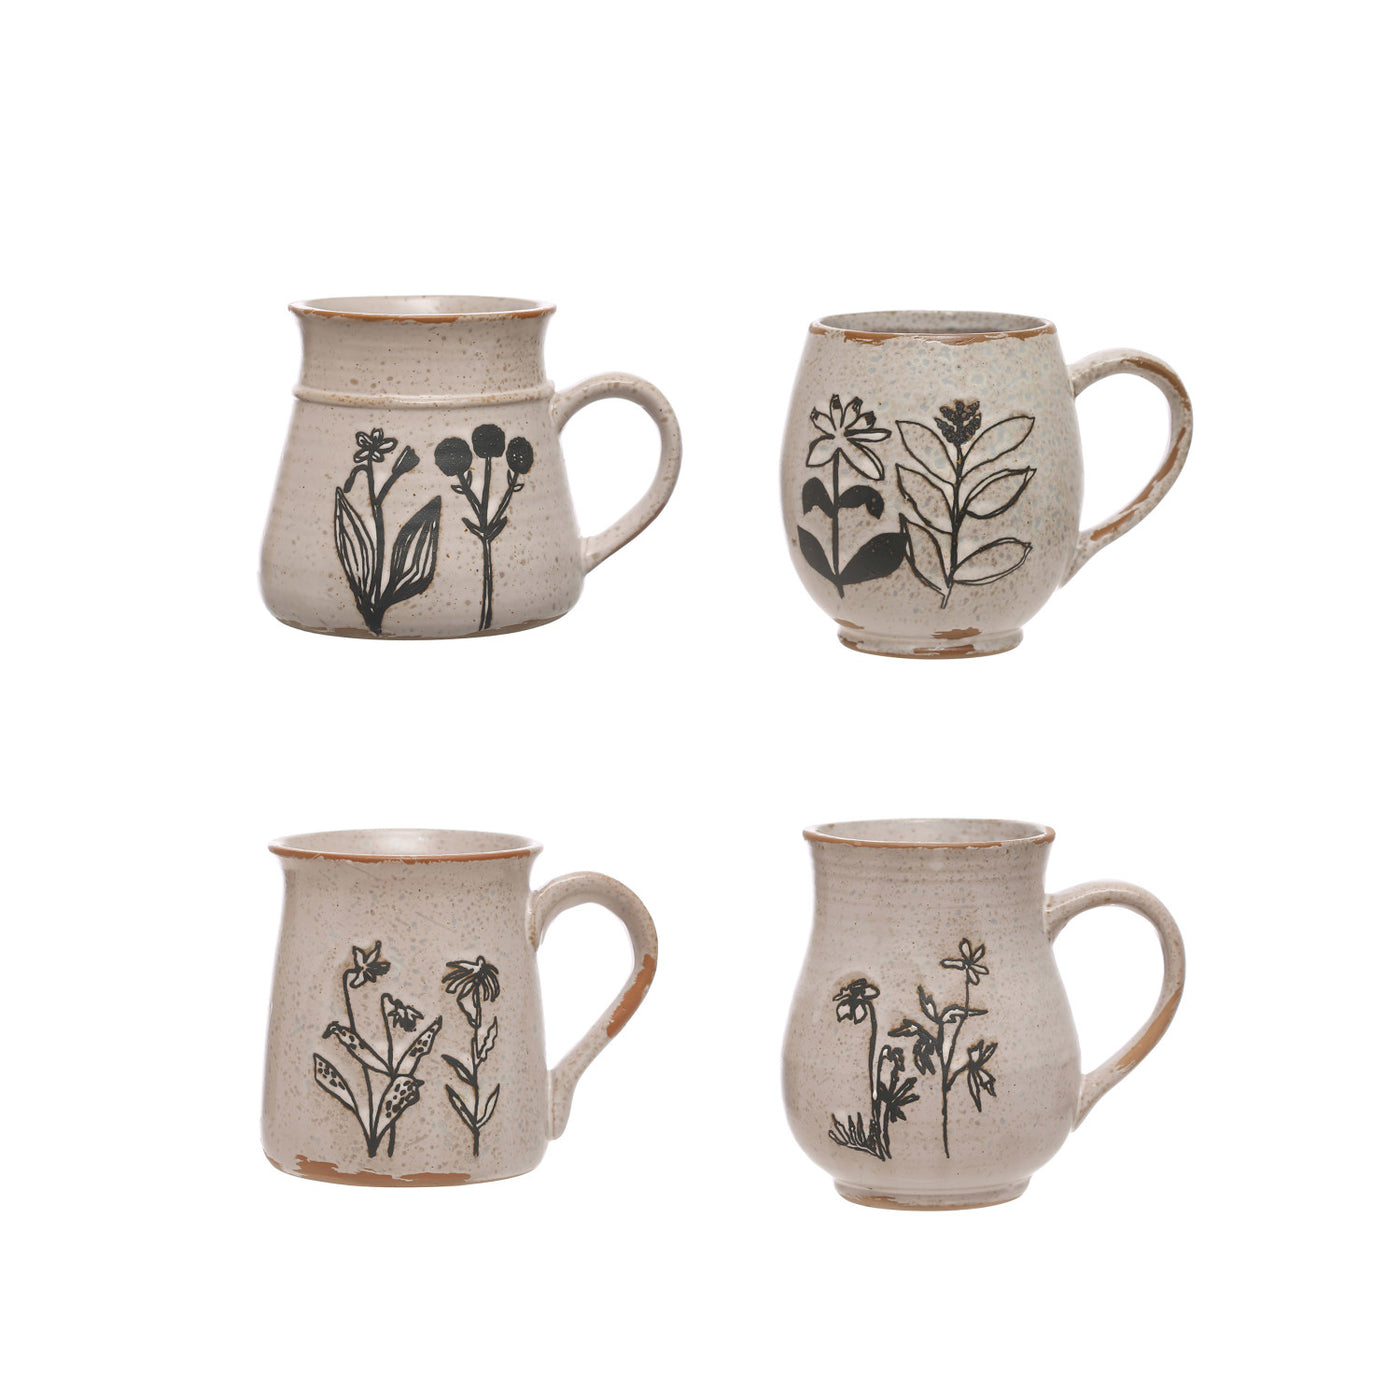 Debossed Stoneware Mug w/ Flowers